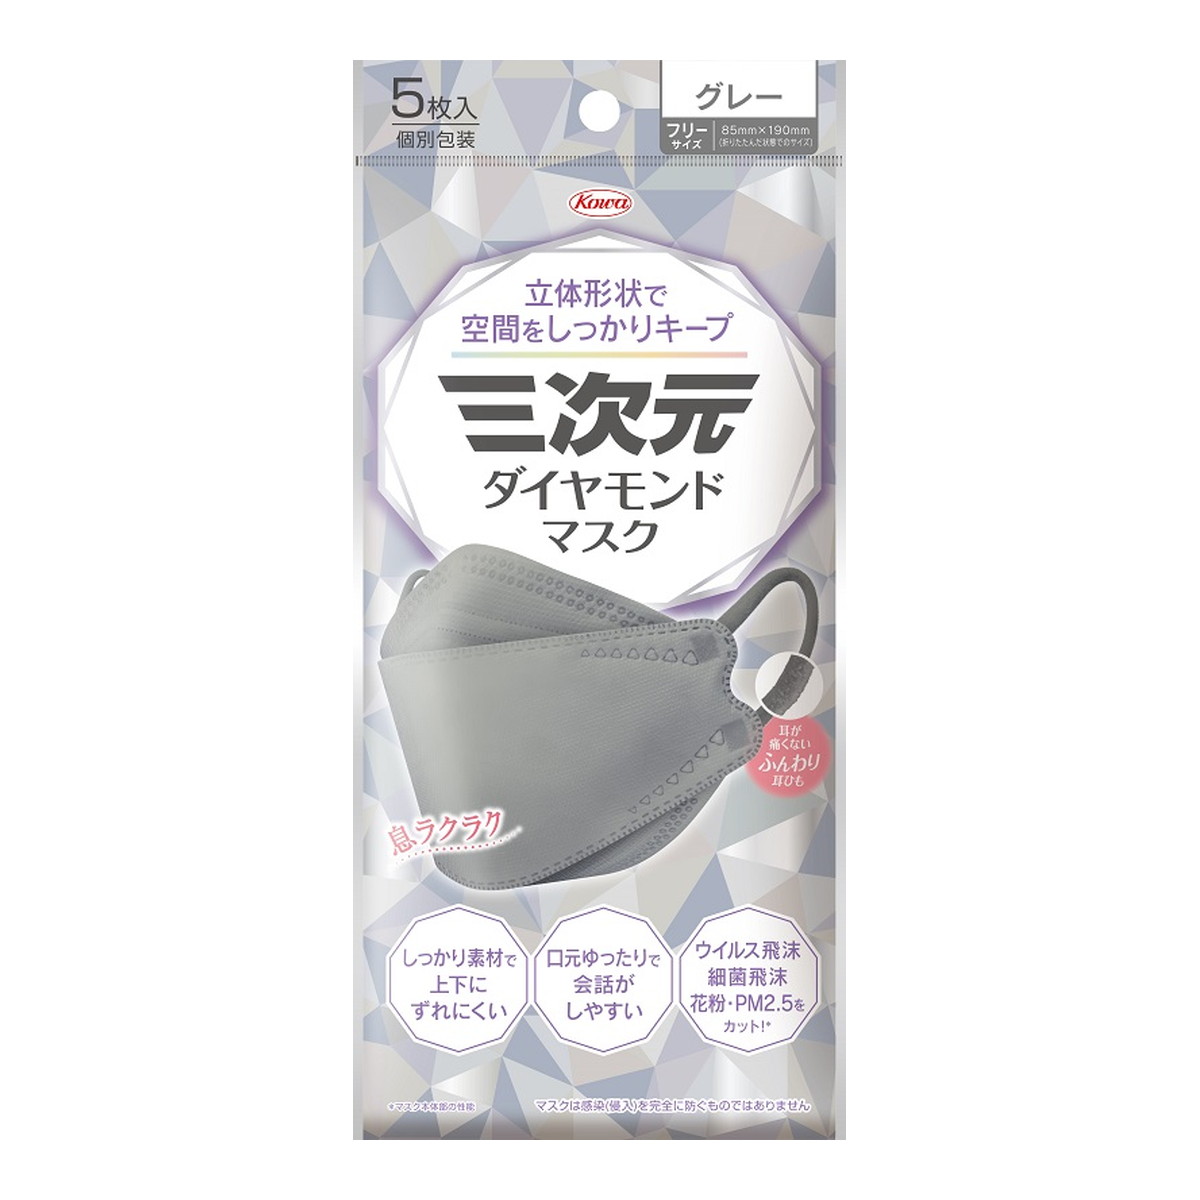 Kowa Kowa 三次元ダイヤモンドマスク フリーサイズ グレー 個別包装 5枚入 × 1個 三次元マスク 衛生用品マスクの商品画像